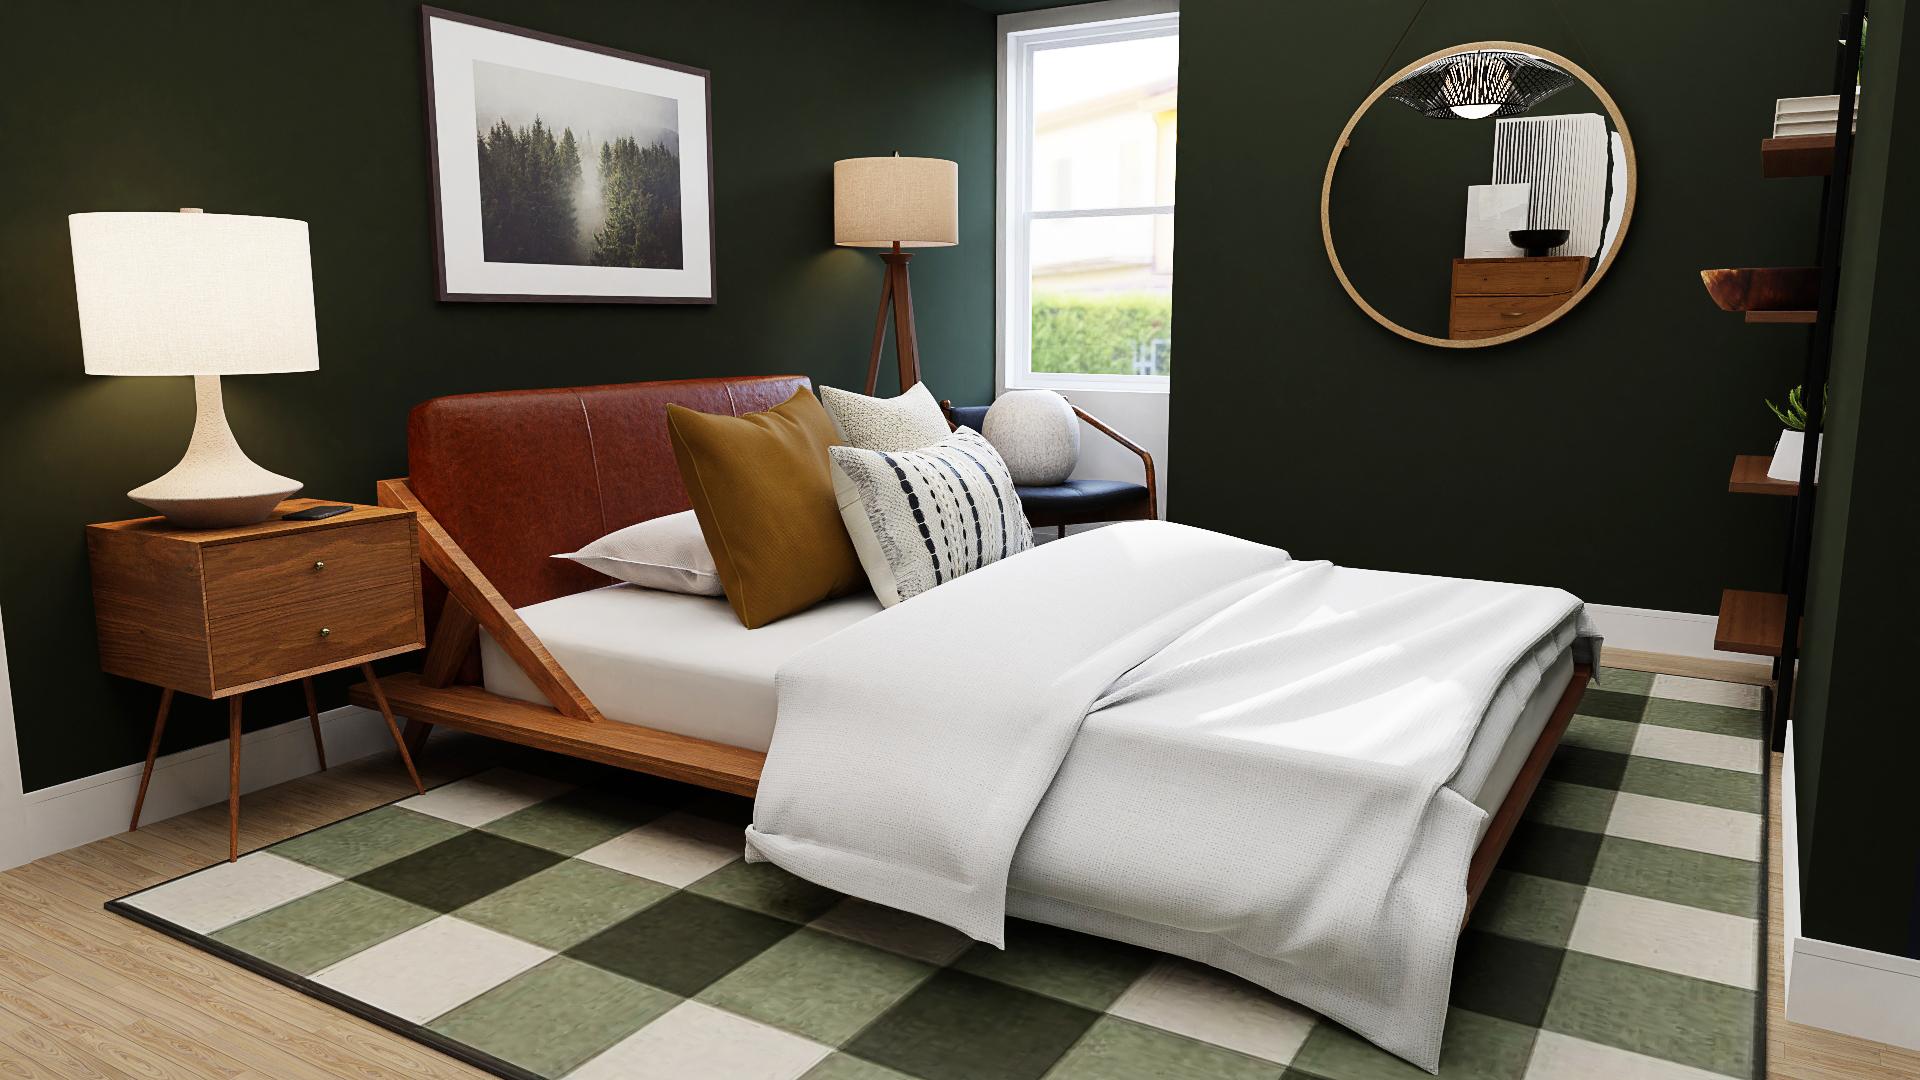 Fern & Pearl Buffalo Checkered Rug: A Rustic Modern Bedroom